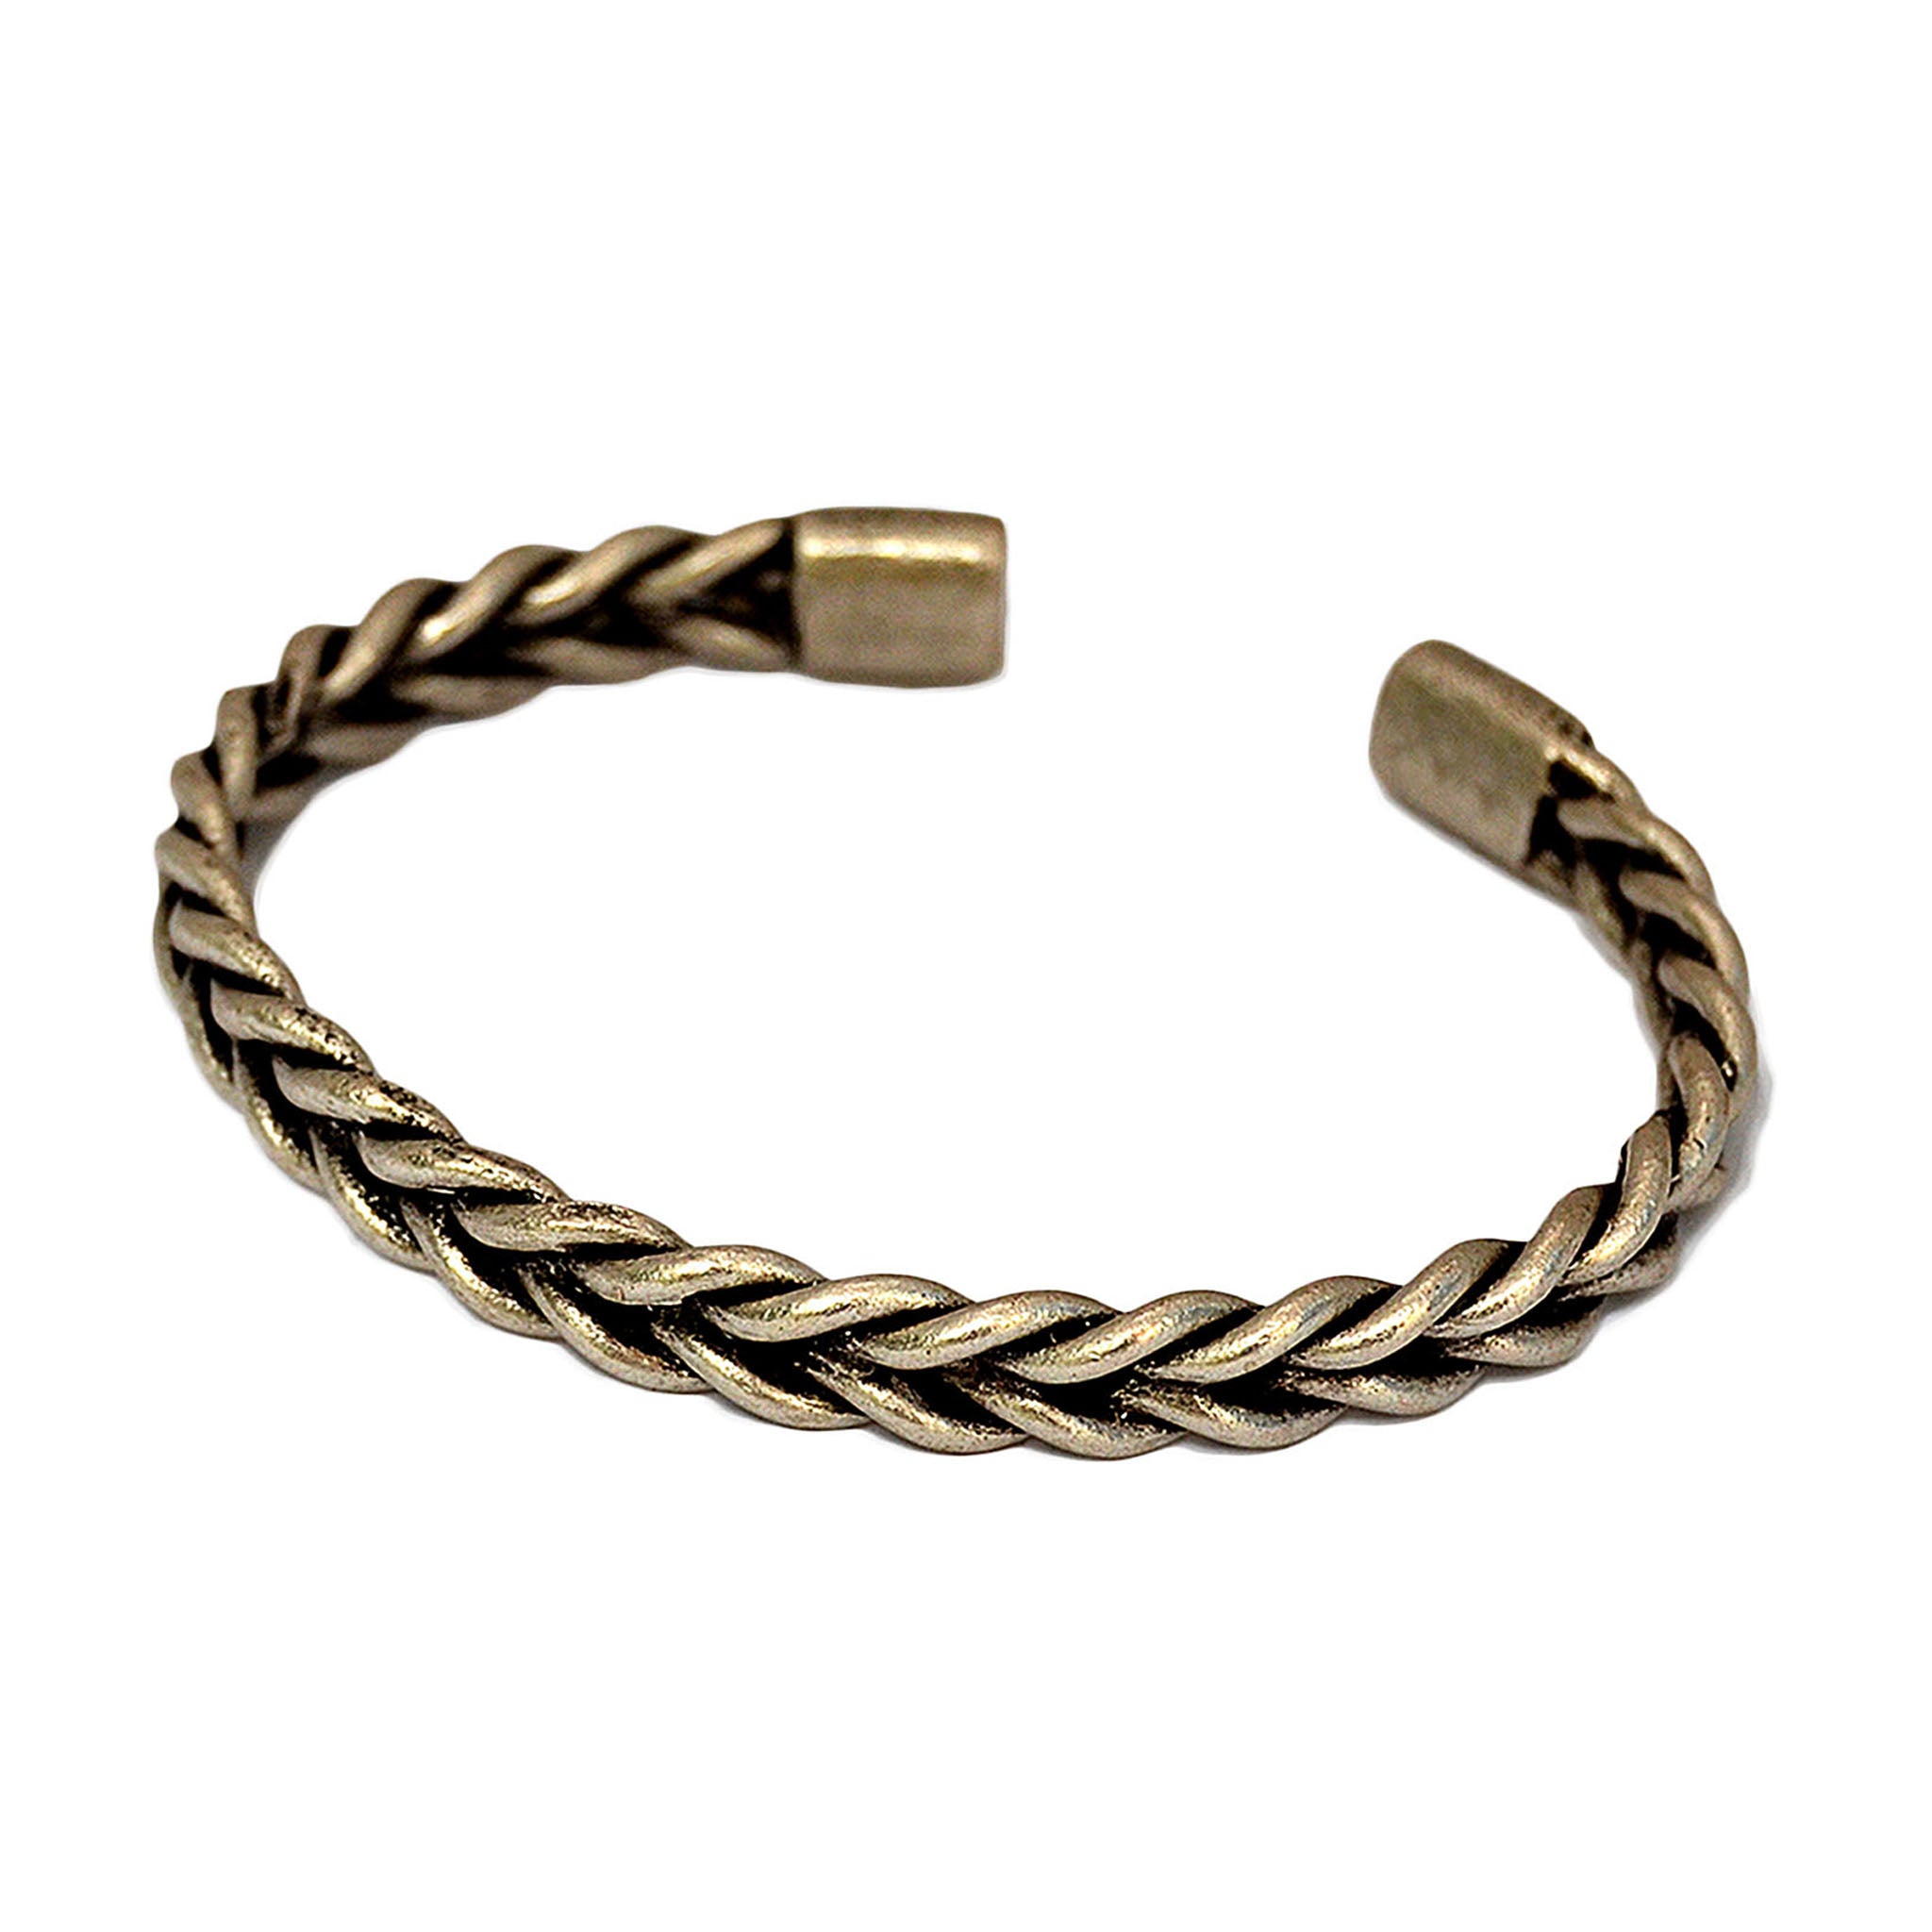 Silver braided bangle